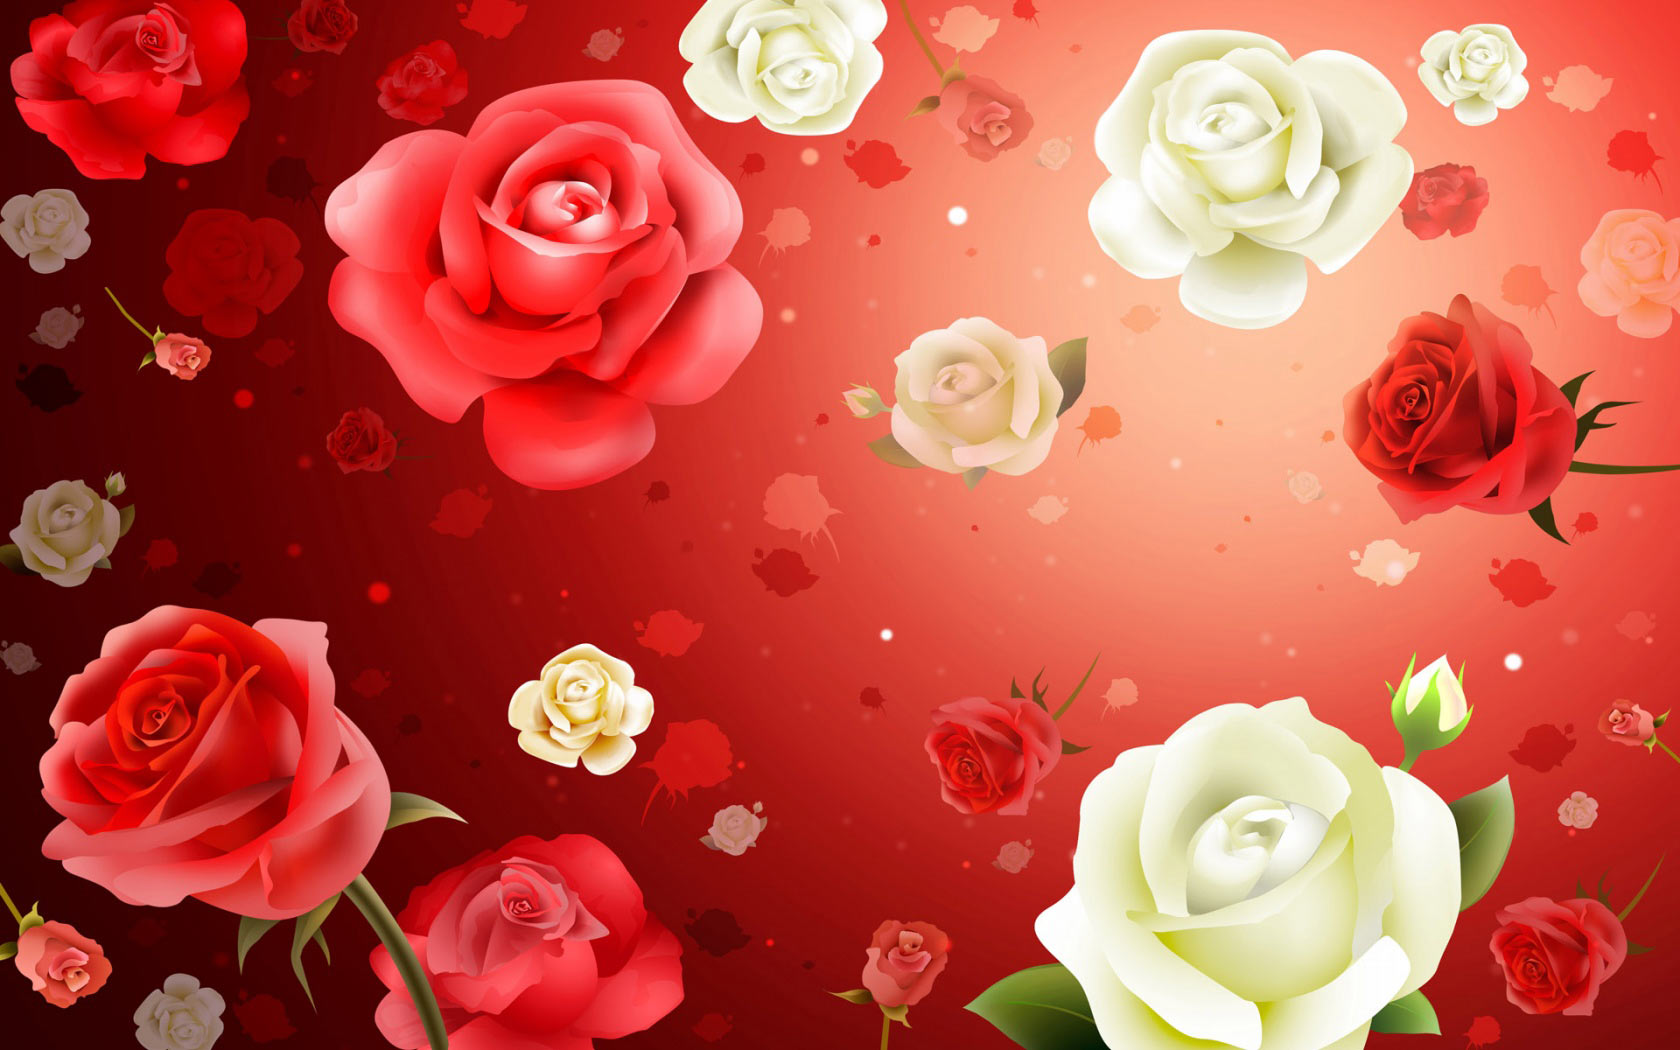 Download Roses flowers backgrounds Windows 7 Desktop Wallpaper in high